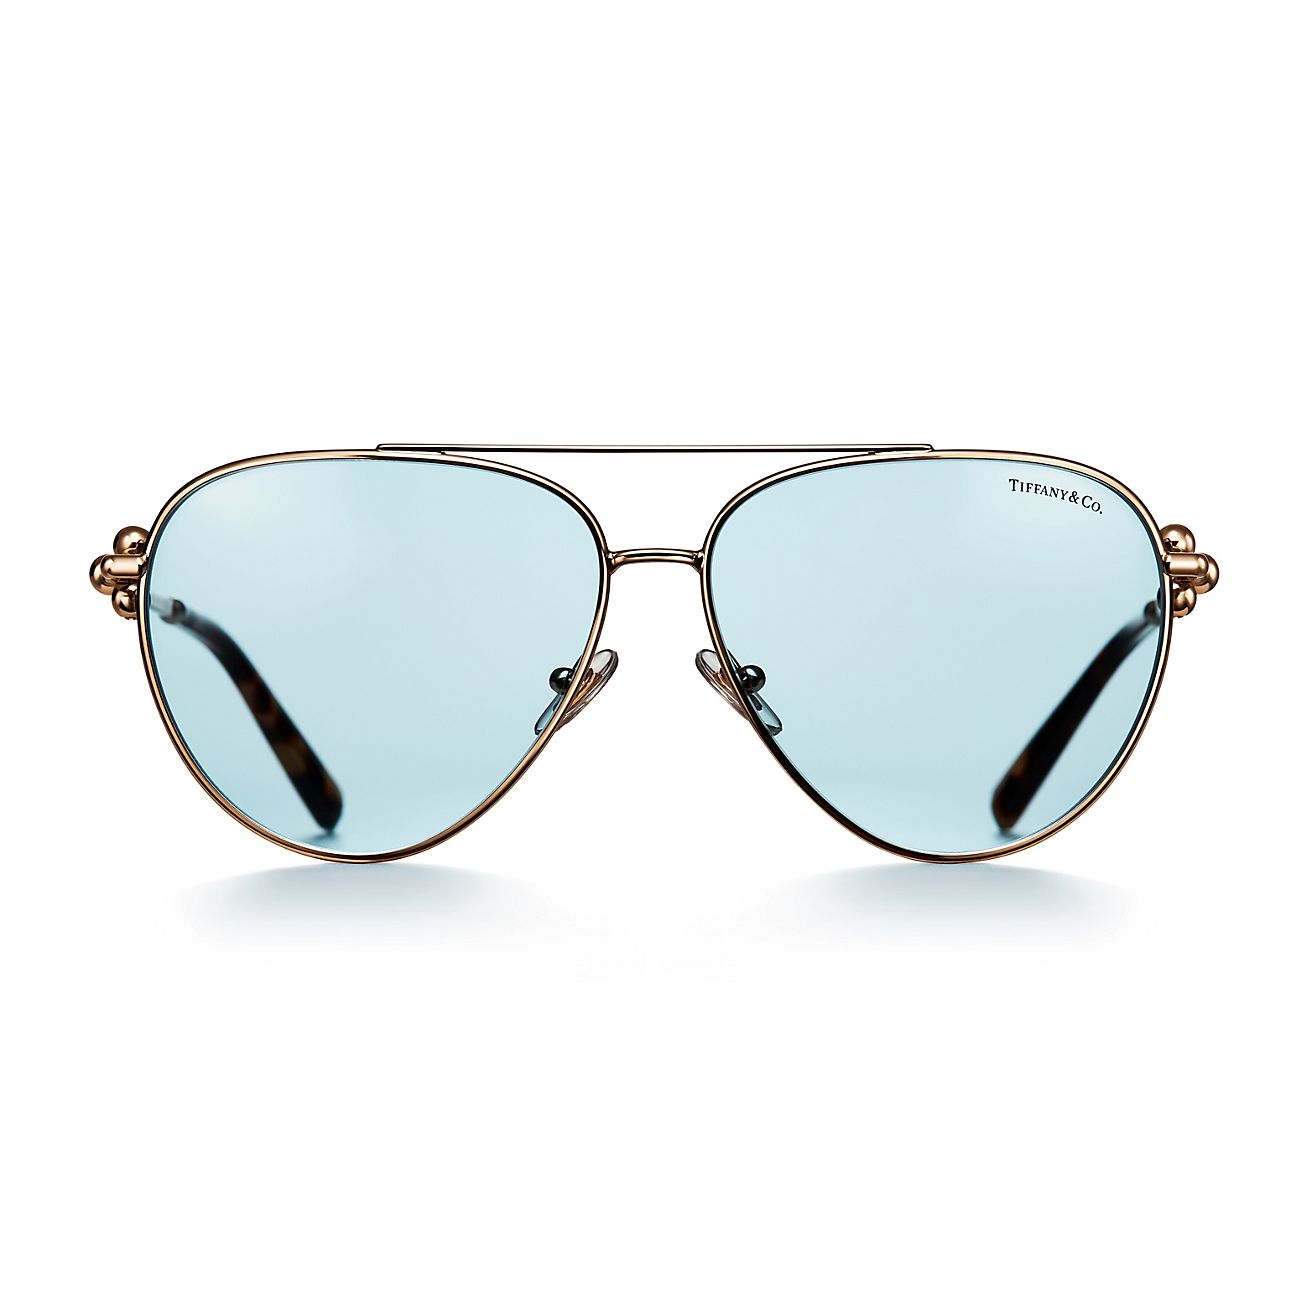 Tiffany & Co Women's Aviator Sunglasses, TF 3083B, Gold, Brown Gradient  Lenses | eBay